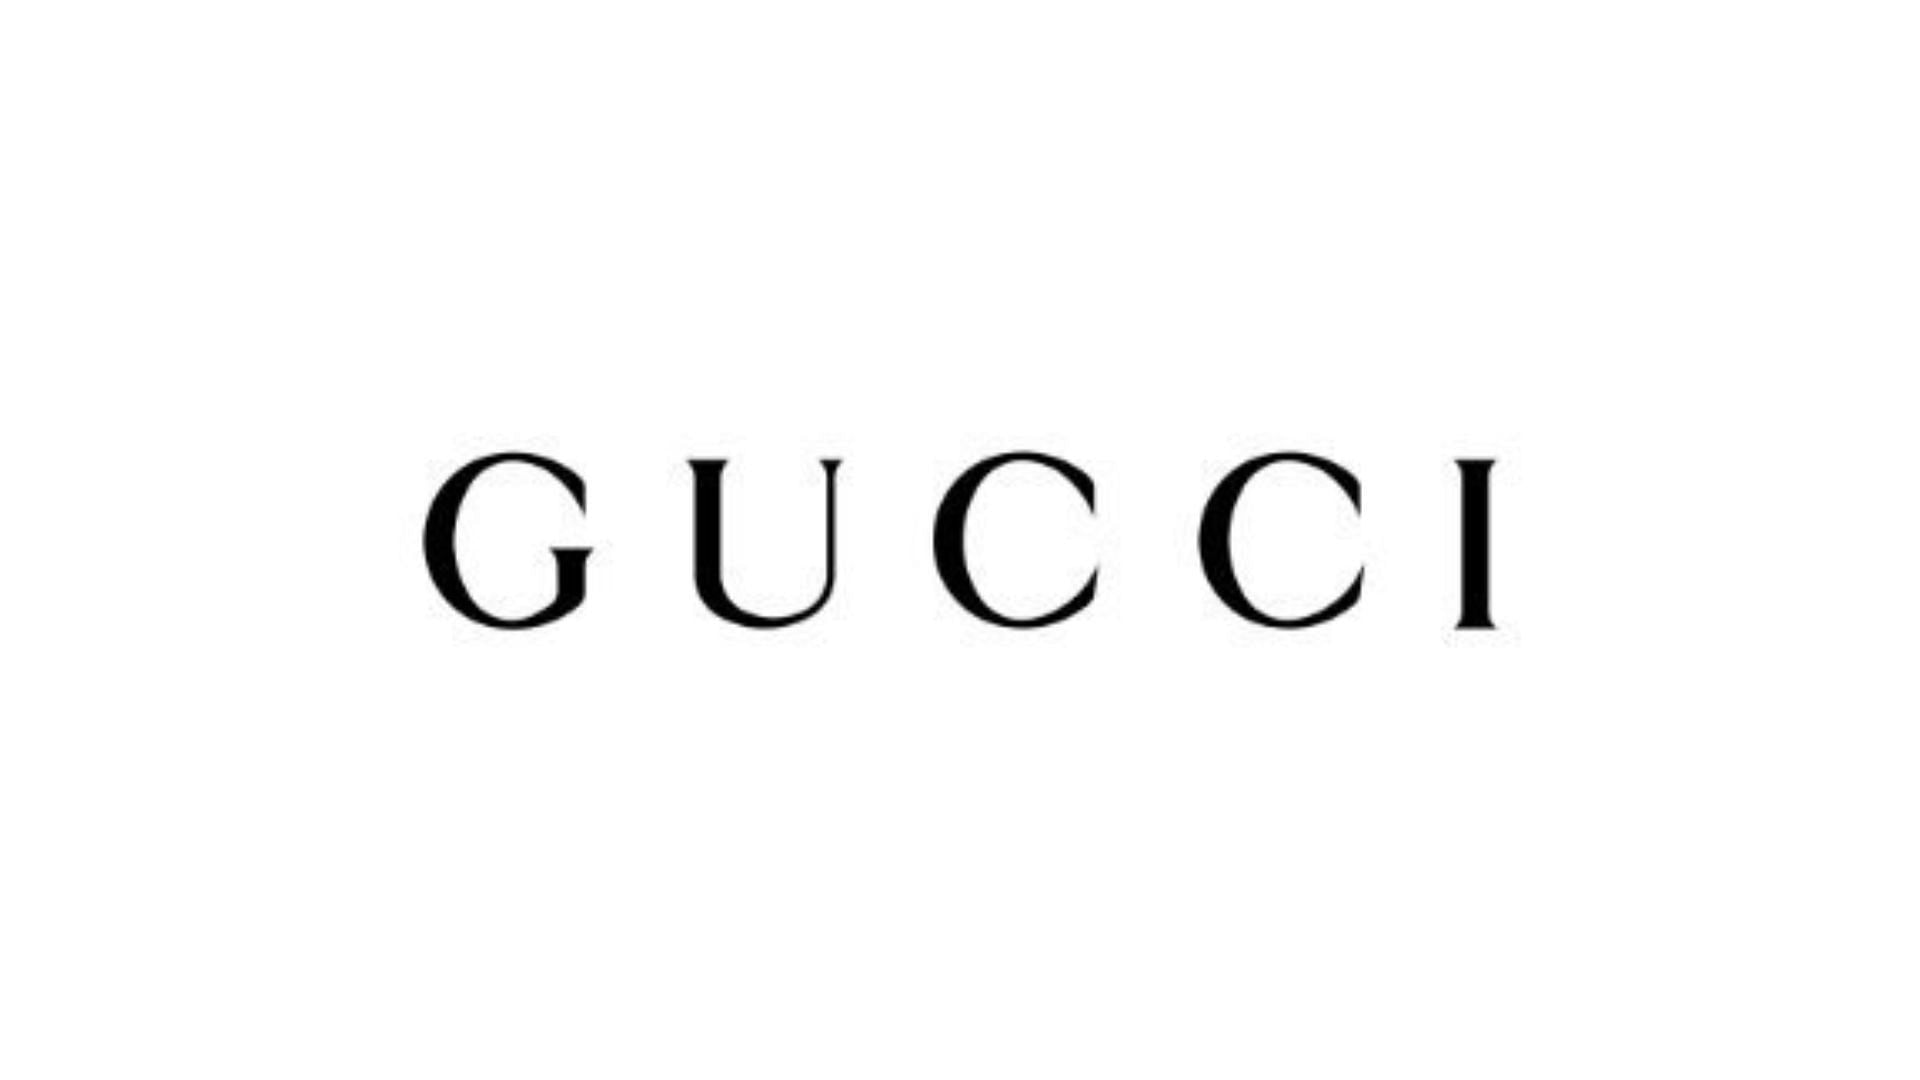 Gucci logo (image via official account)